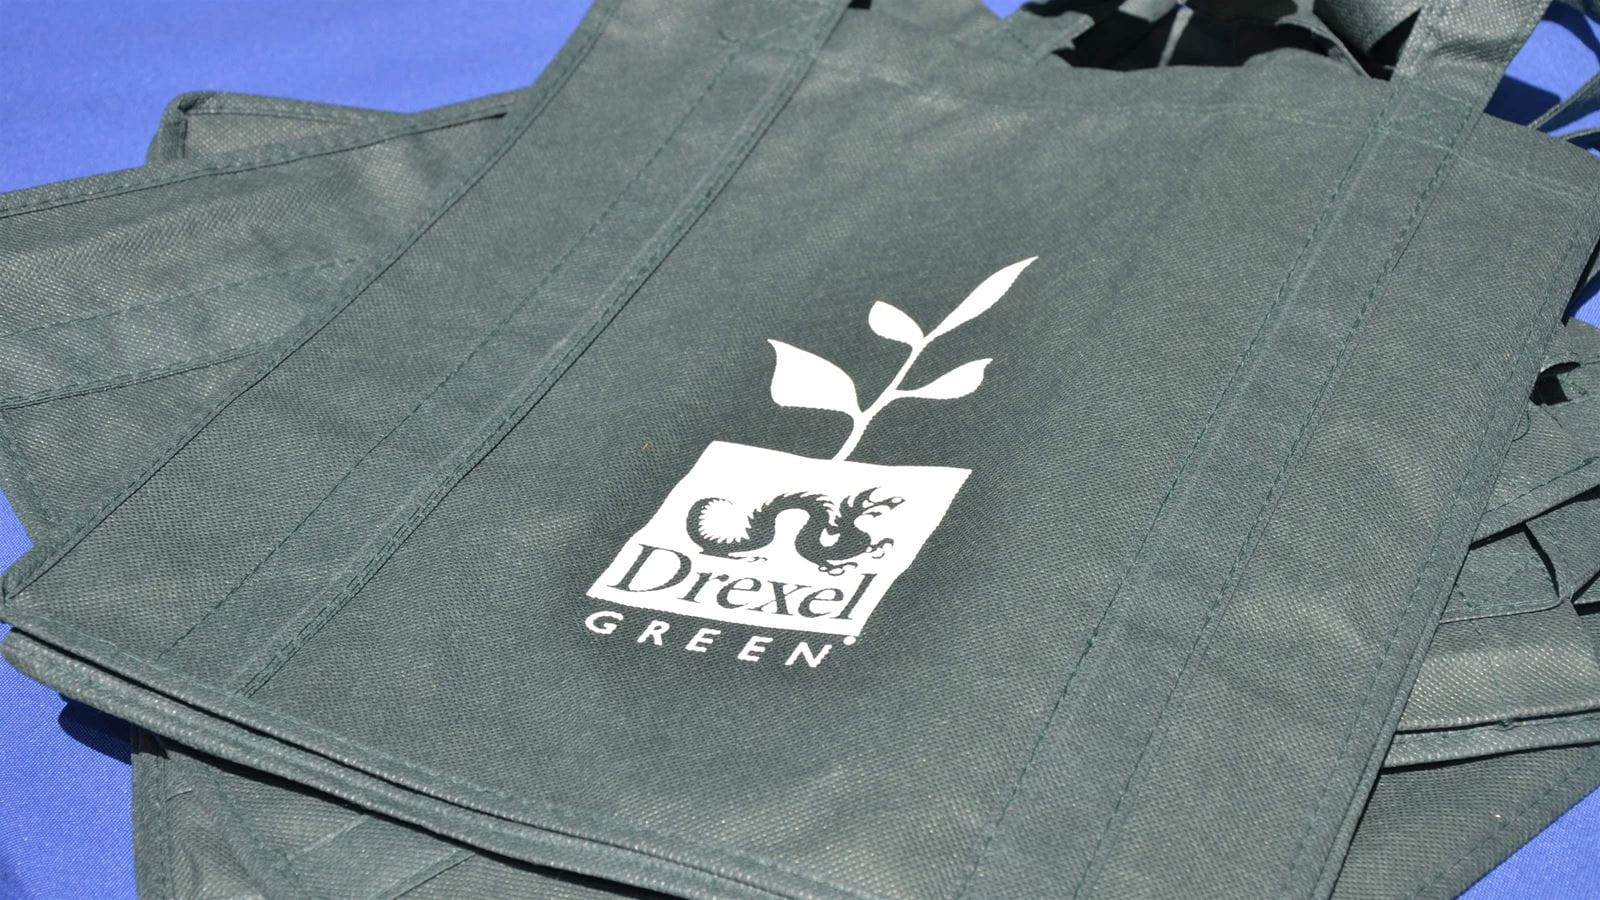 Green reusable bag reading Drexel Green